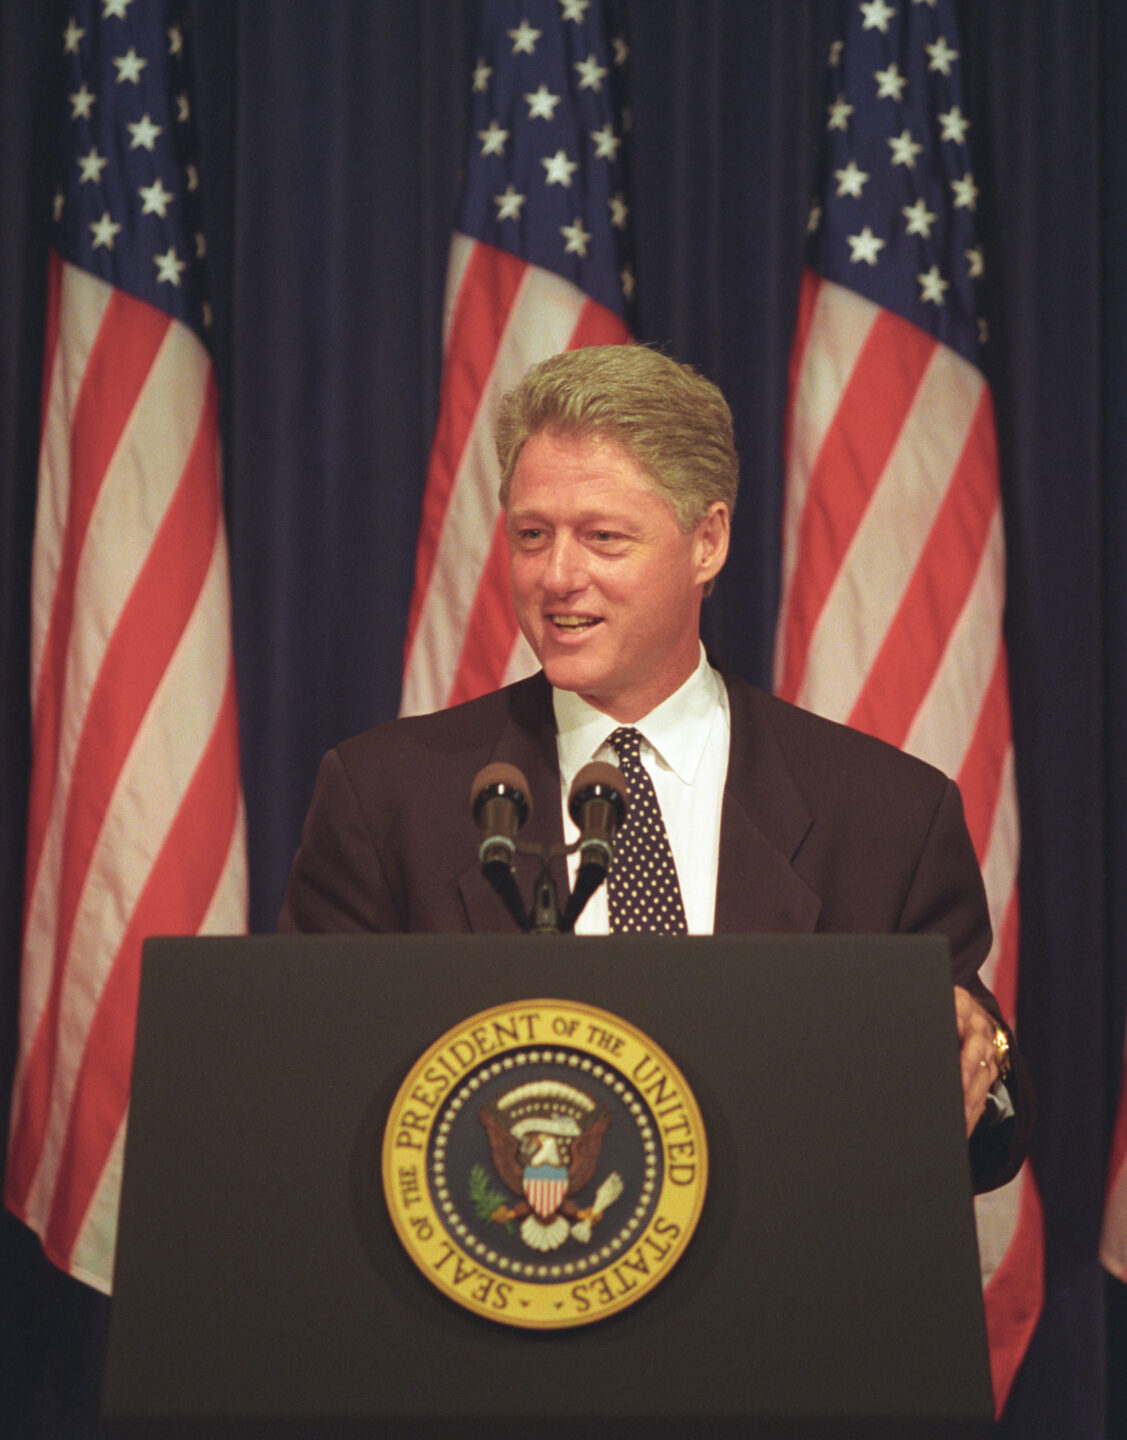 President Bill Clinton speaking at podium